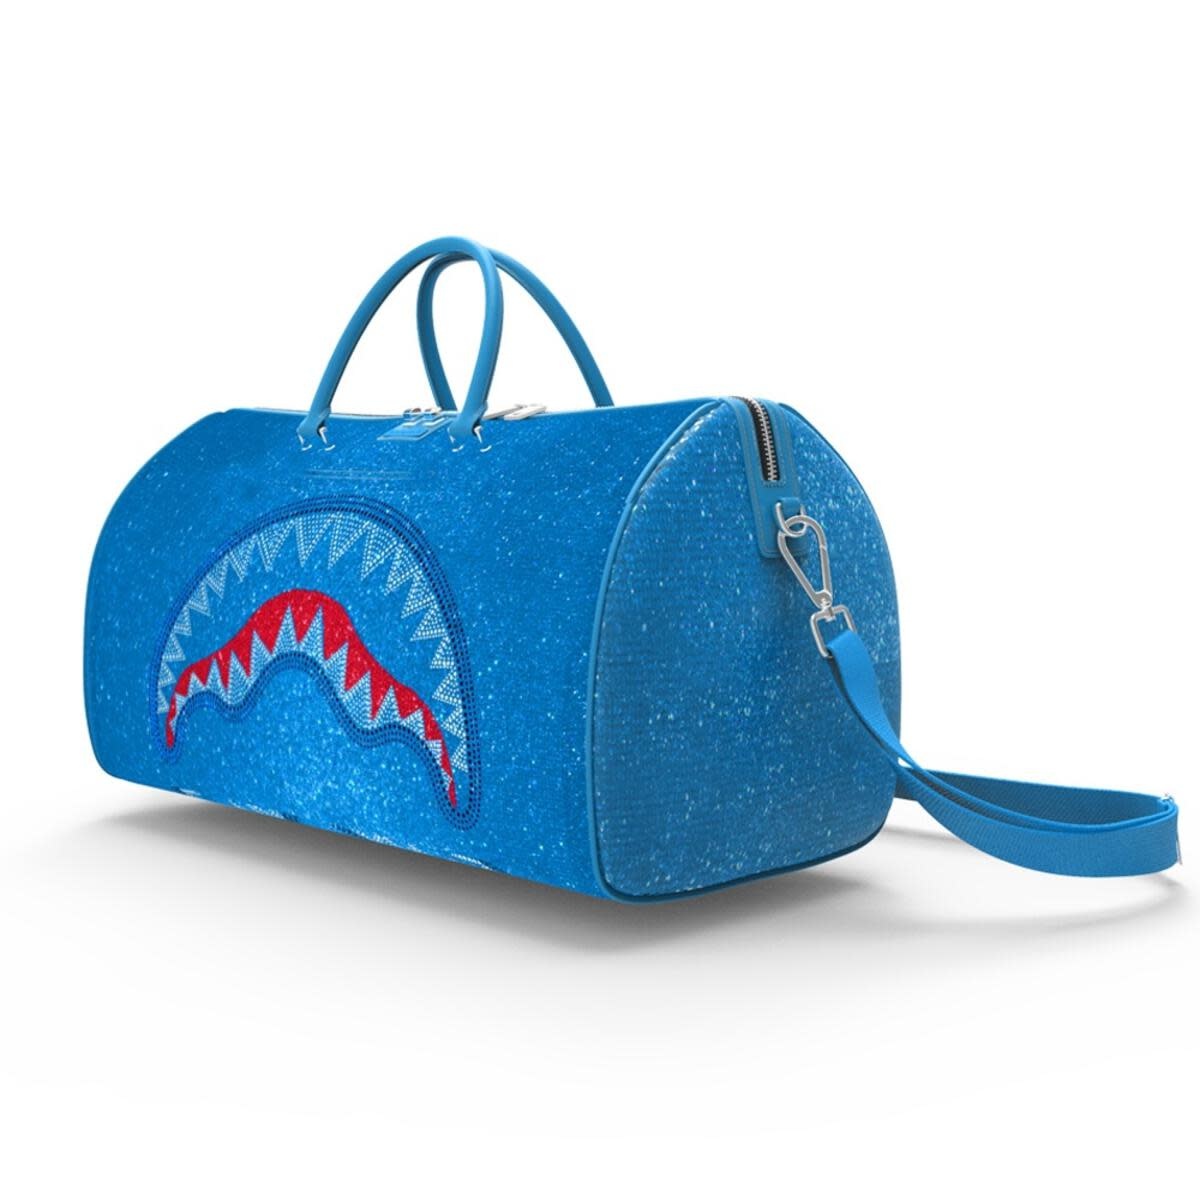 Luggage & Travel bags Sprayground - Sharks in paris check mini